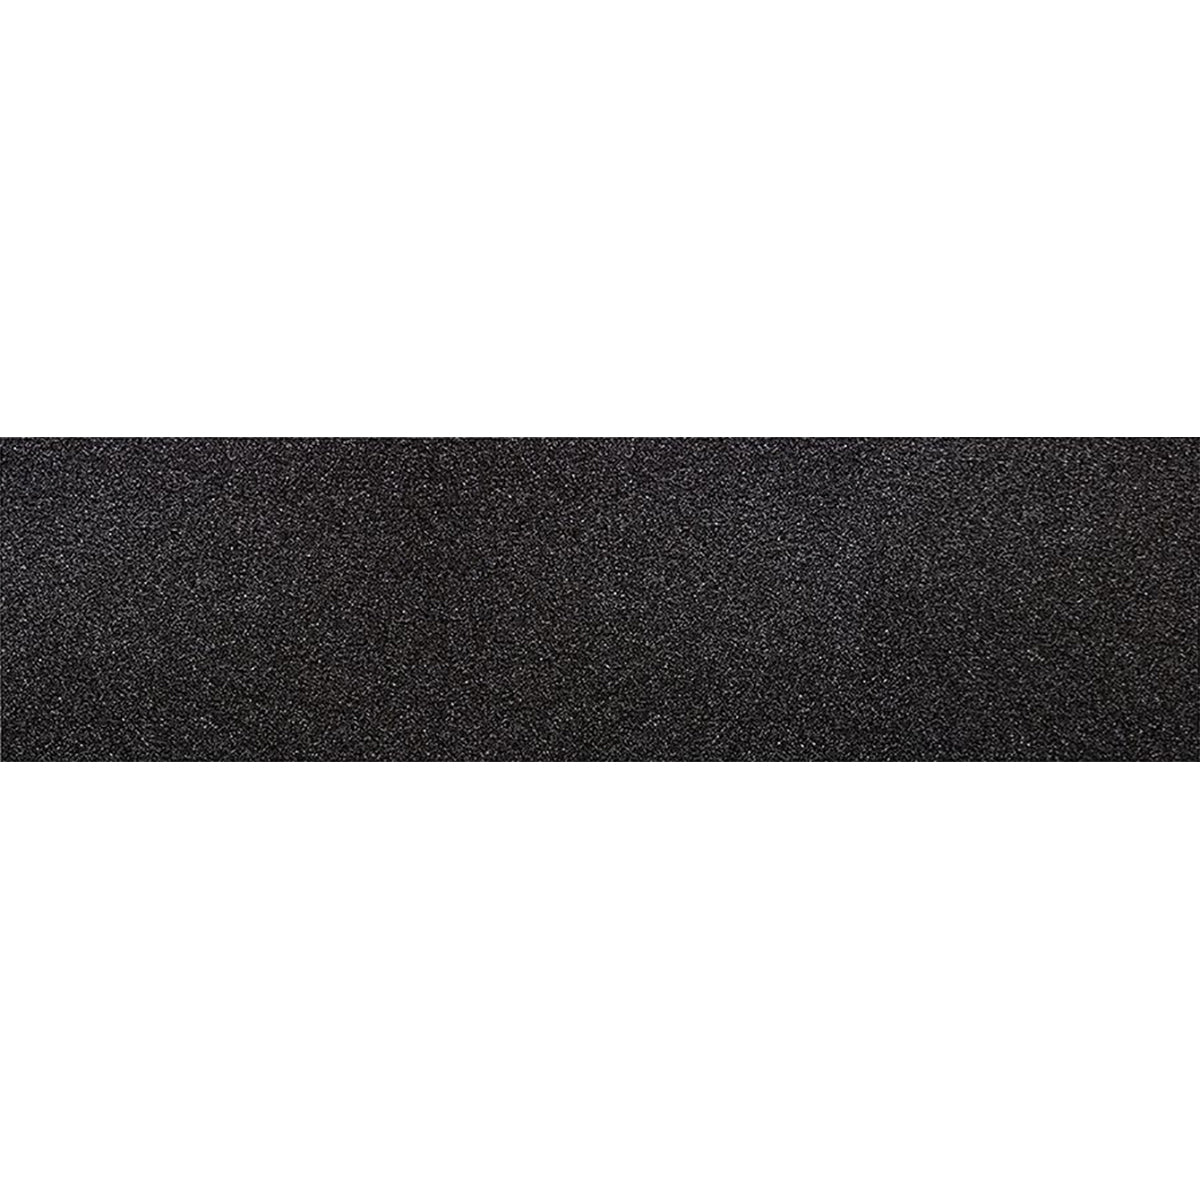 Jessup Ultra Grip Tape Sheet Skateboard Accessories-GTR9-33